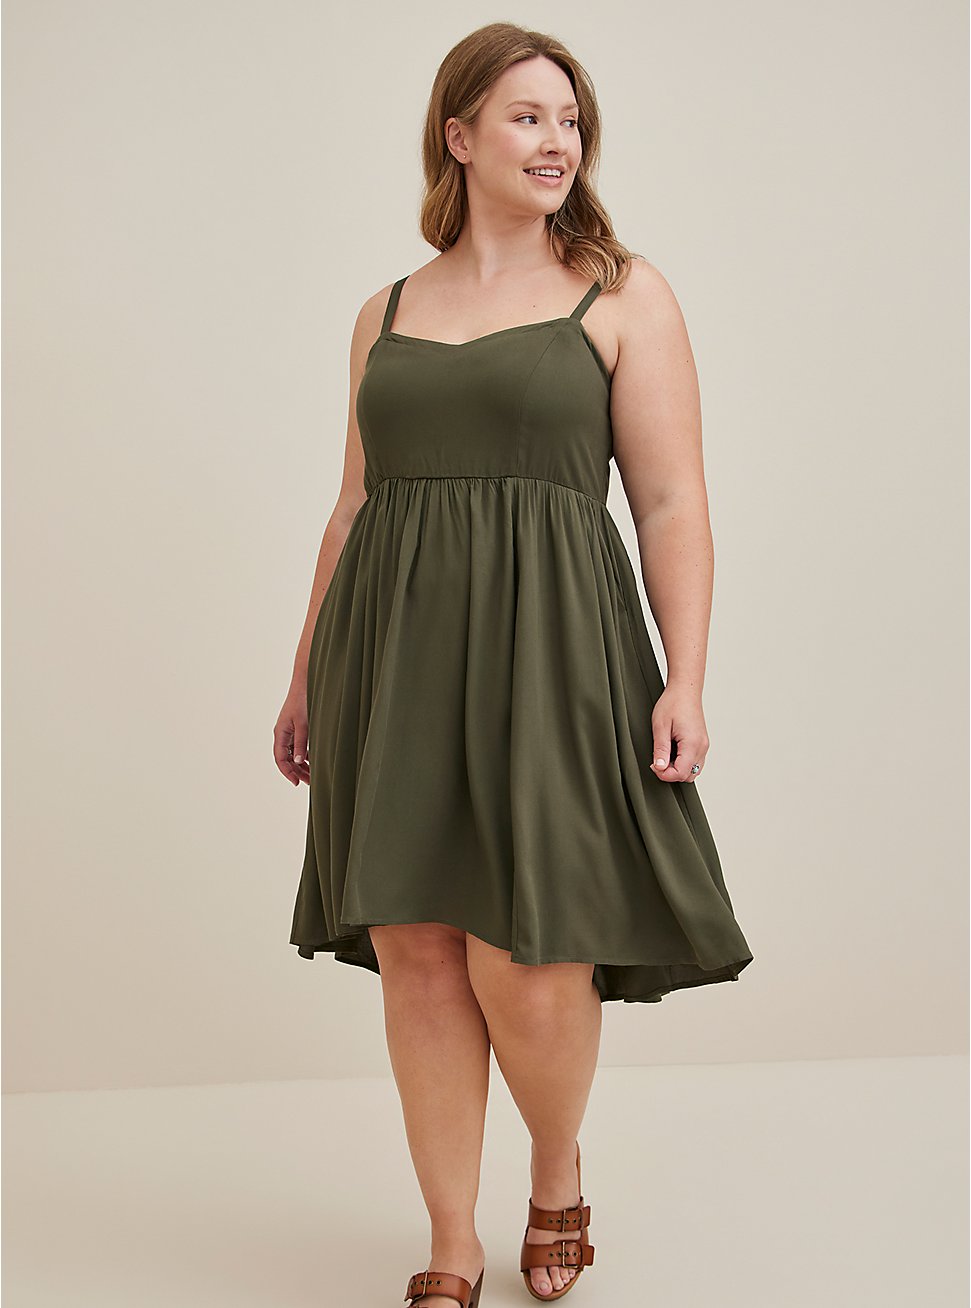 Plus Size Hi-Low Tank Dress - Challis Olive, DEEP DEPTHS, hi-res